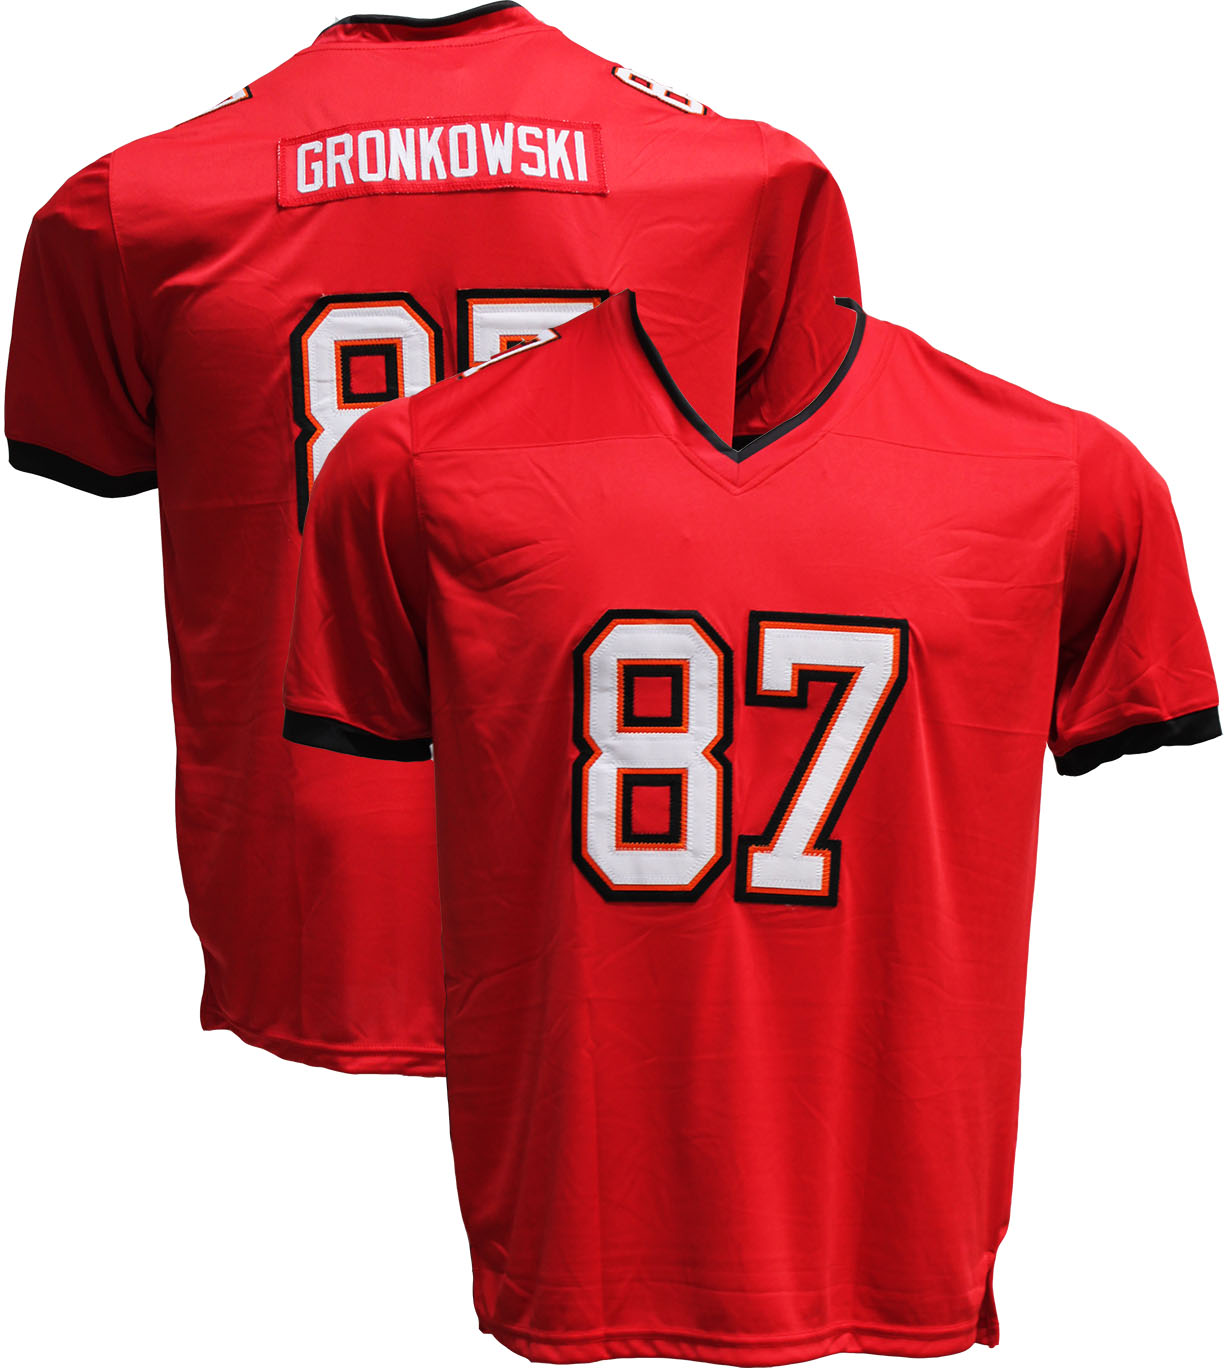 rob gronkowski jersey number